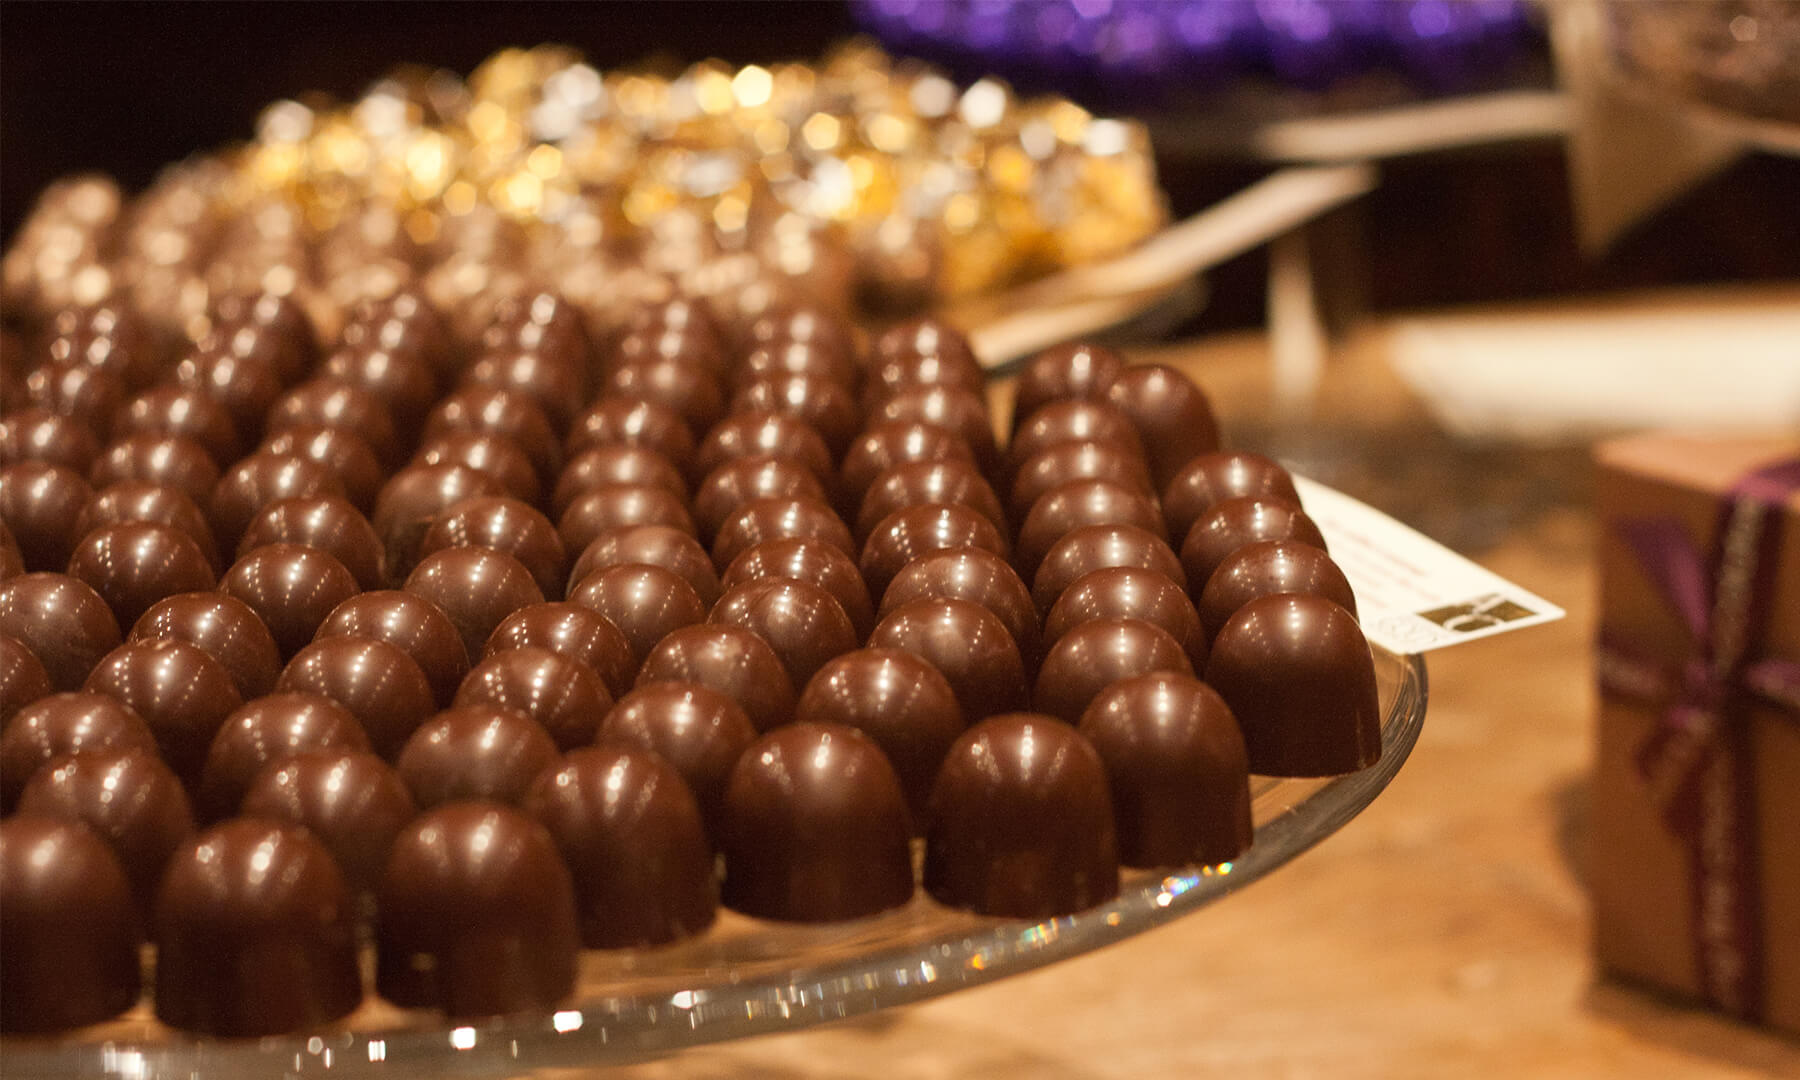 A close up of chocolate treats